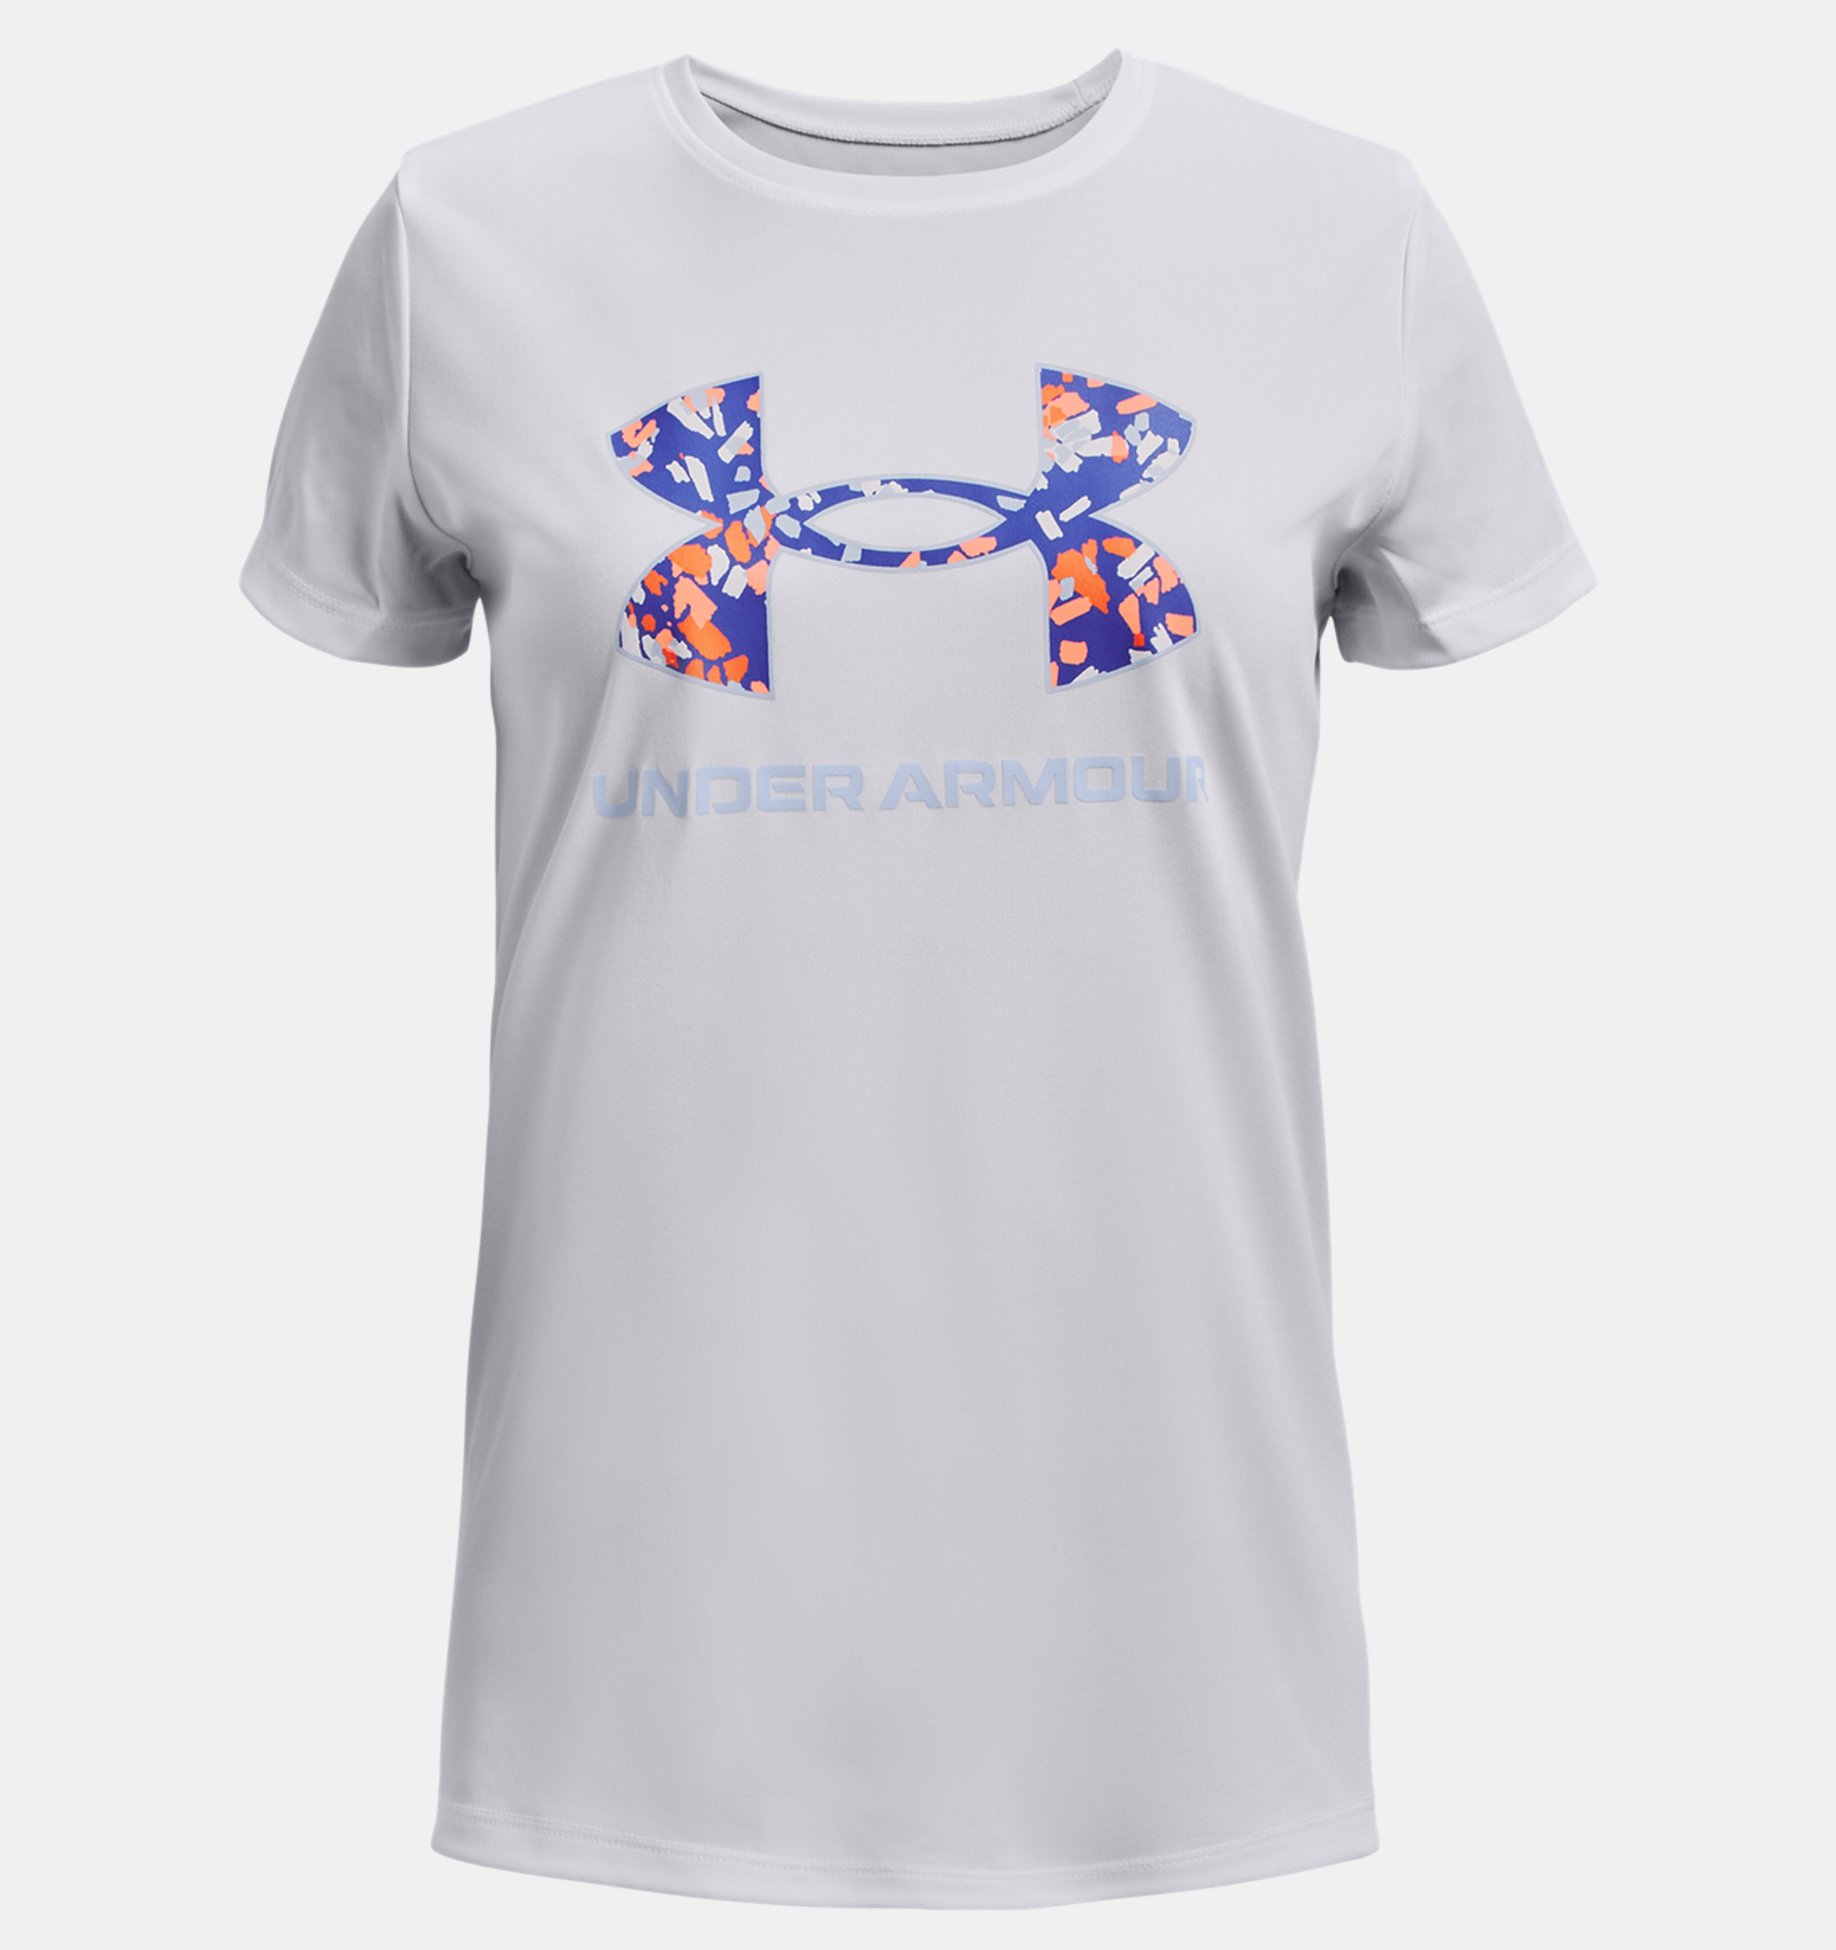 Under Armour Girls’ Big Logo Solid Short Sleeve T-Shirt 